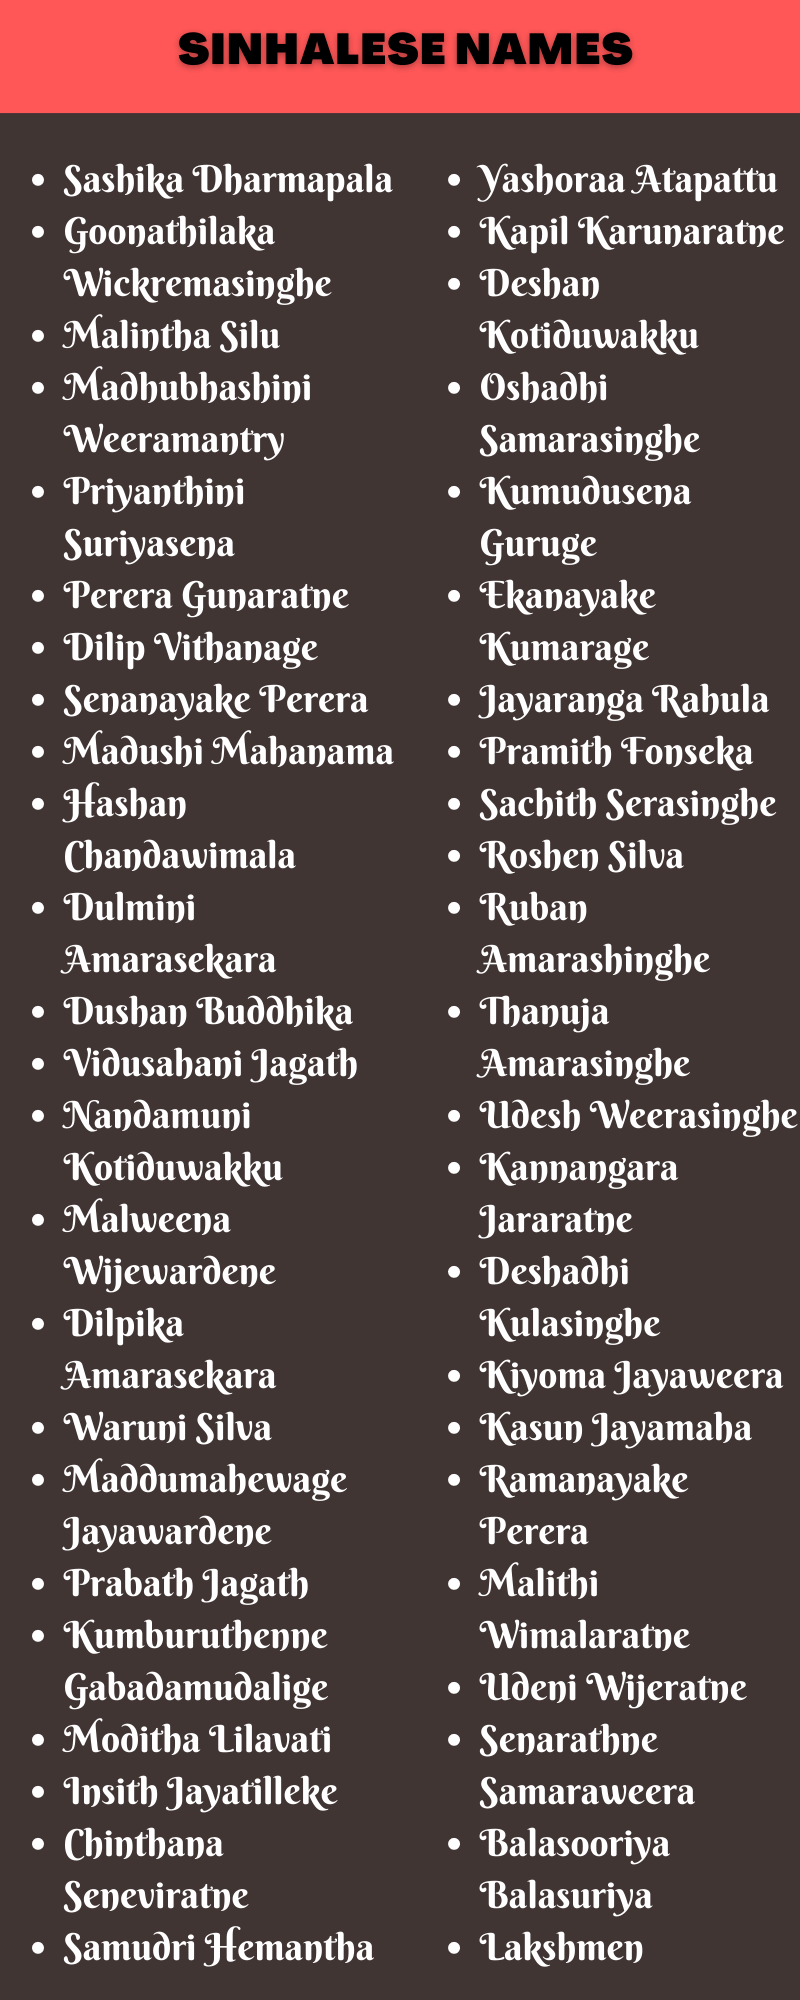 Sinhalese Names